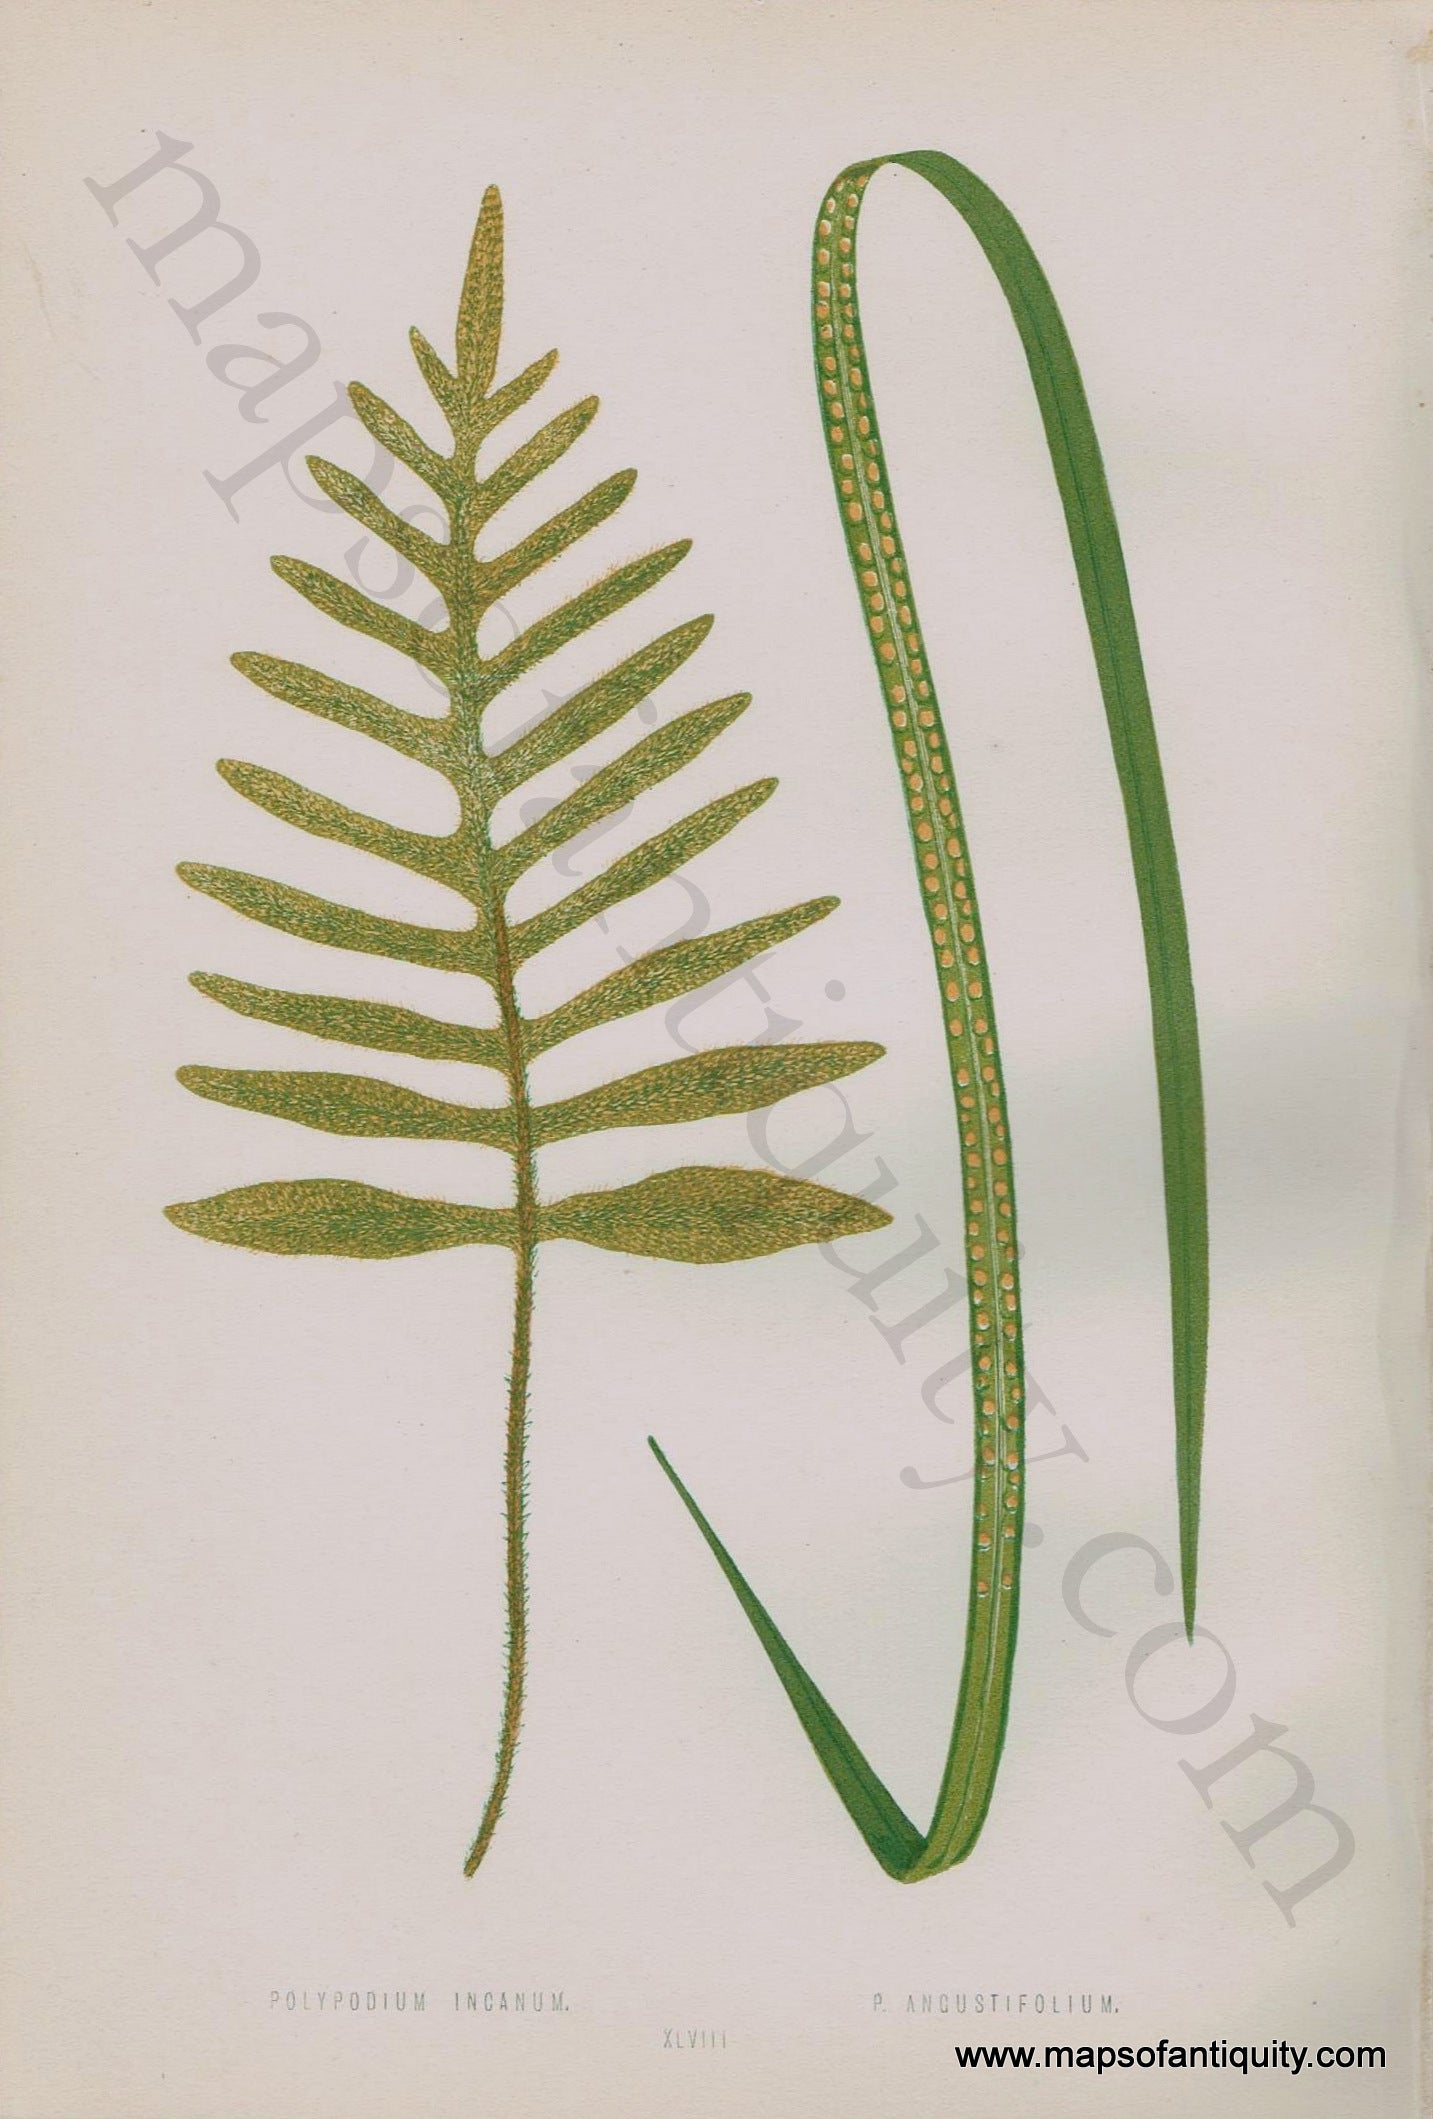 Antique-Chromoxylograph-Print-Fern-Ferns-Polypodium-incanum-&-P.-angustifolium-1861-1864-E.J.-Lowe-Botanical-Ferns:-British-and-Exotic-1800s-19th-century-Maps-of-Antiquity